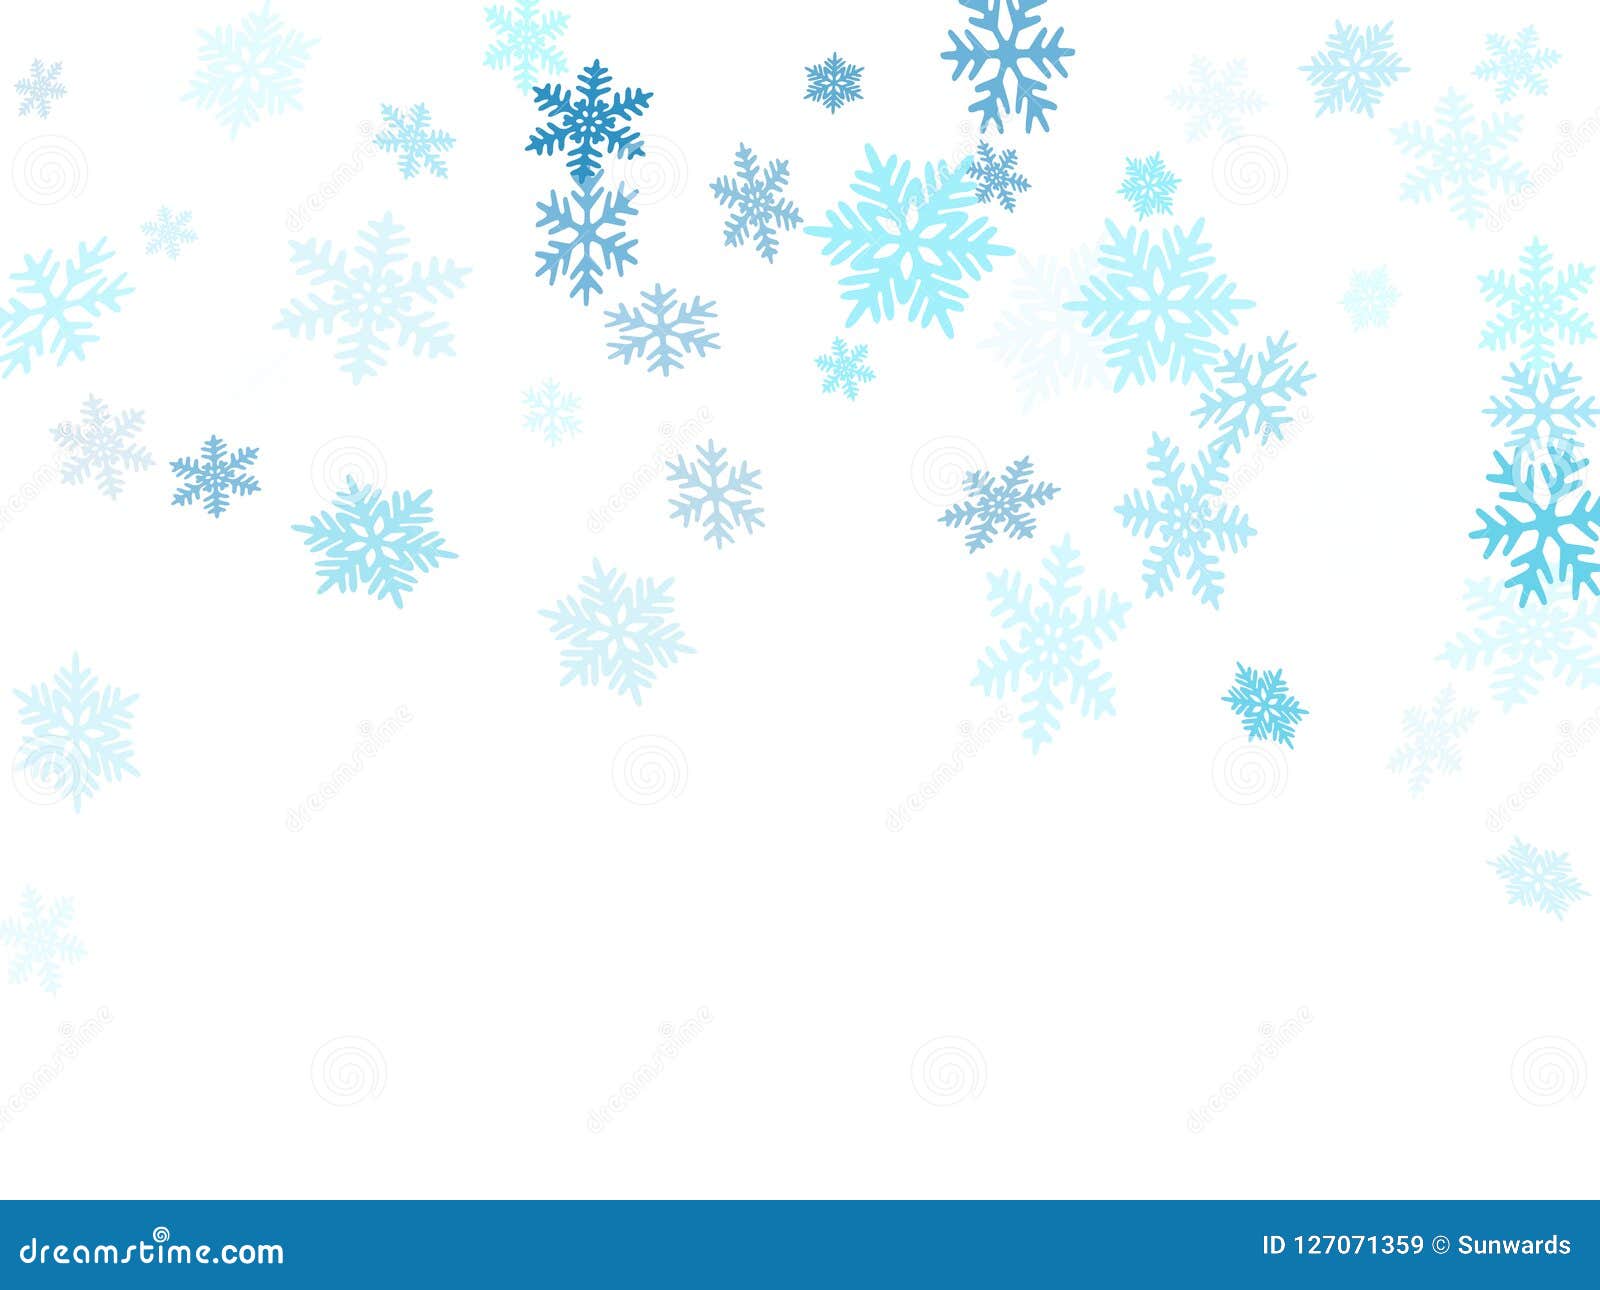 Snow Flakes Falling Macro Vector Illustration Christmas Snowflakes